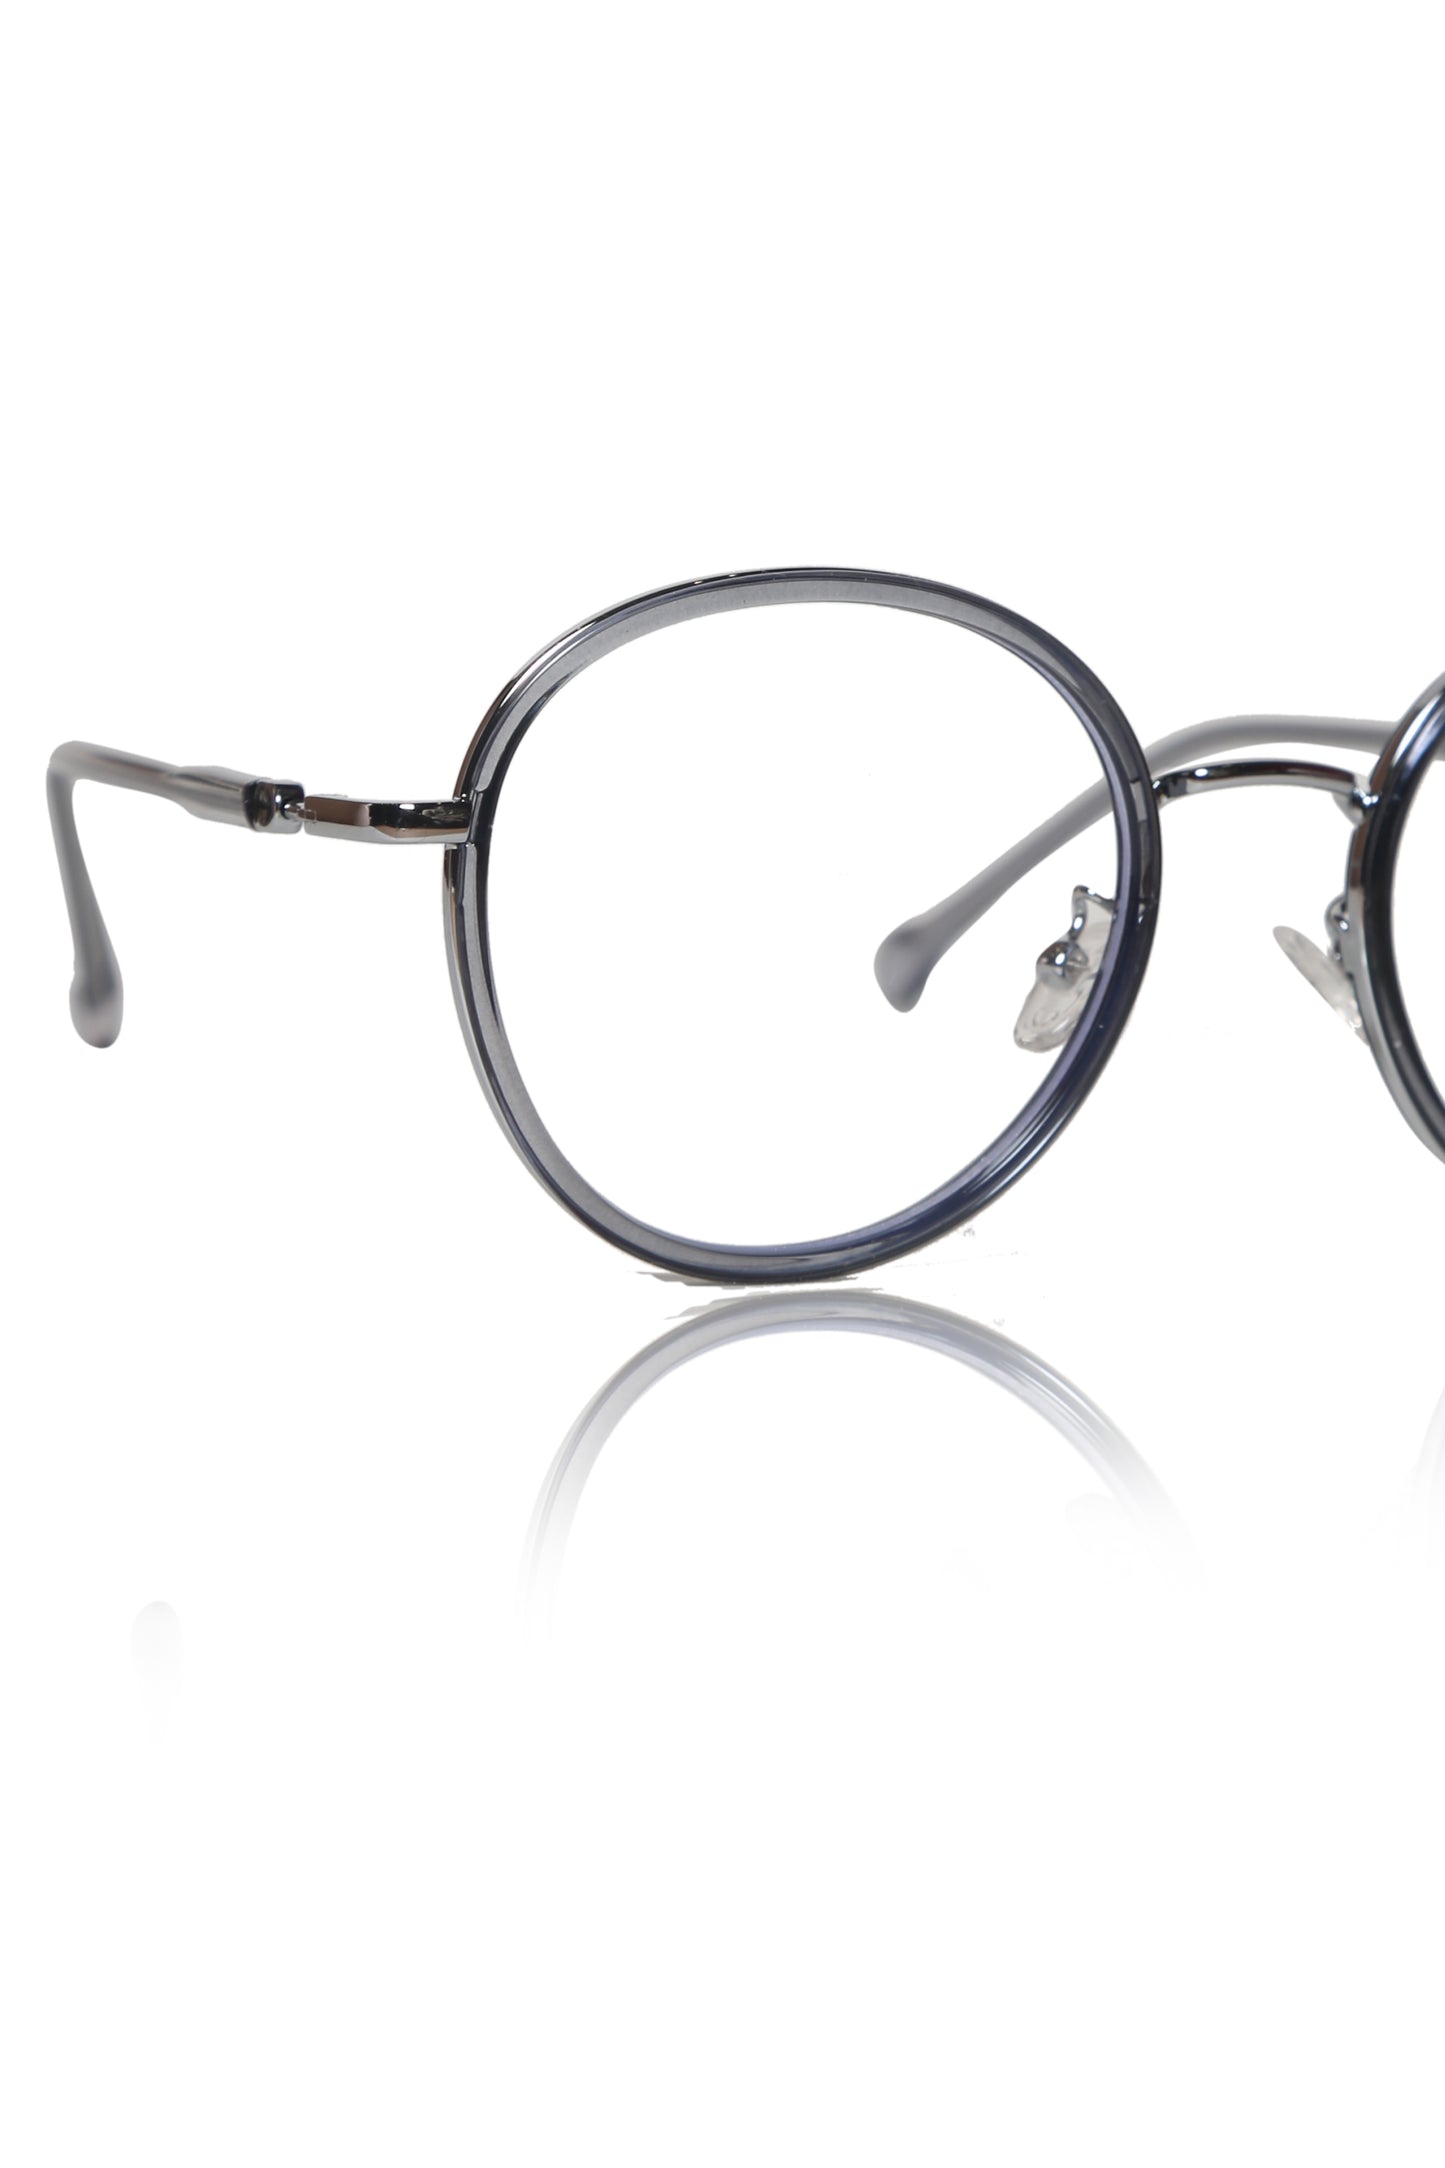 Jodykoes® Premium Series Round Eyewear Eyeglasses Spectacles Frame for Men and Women (Grey)